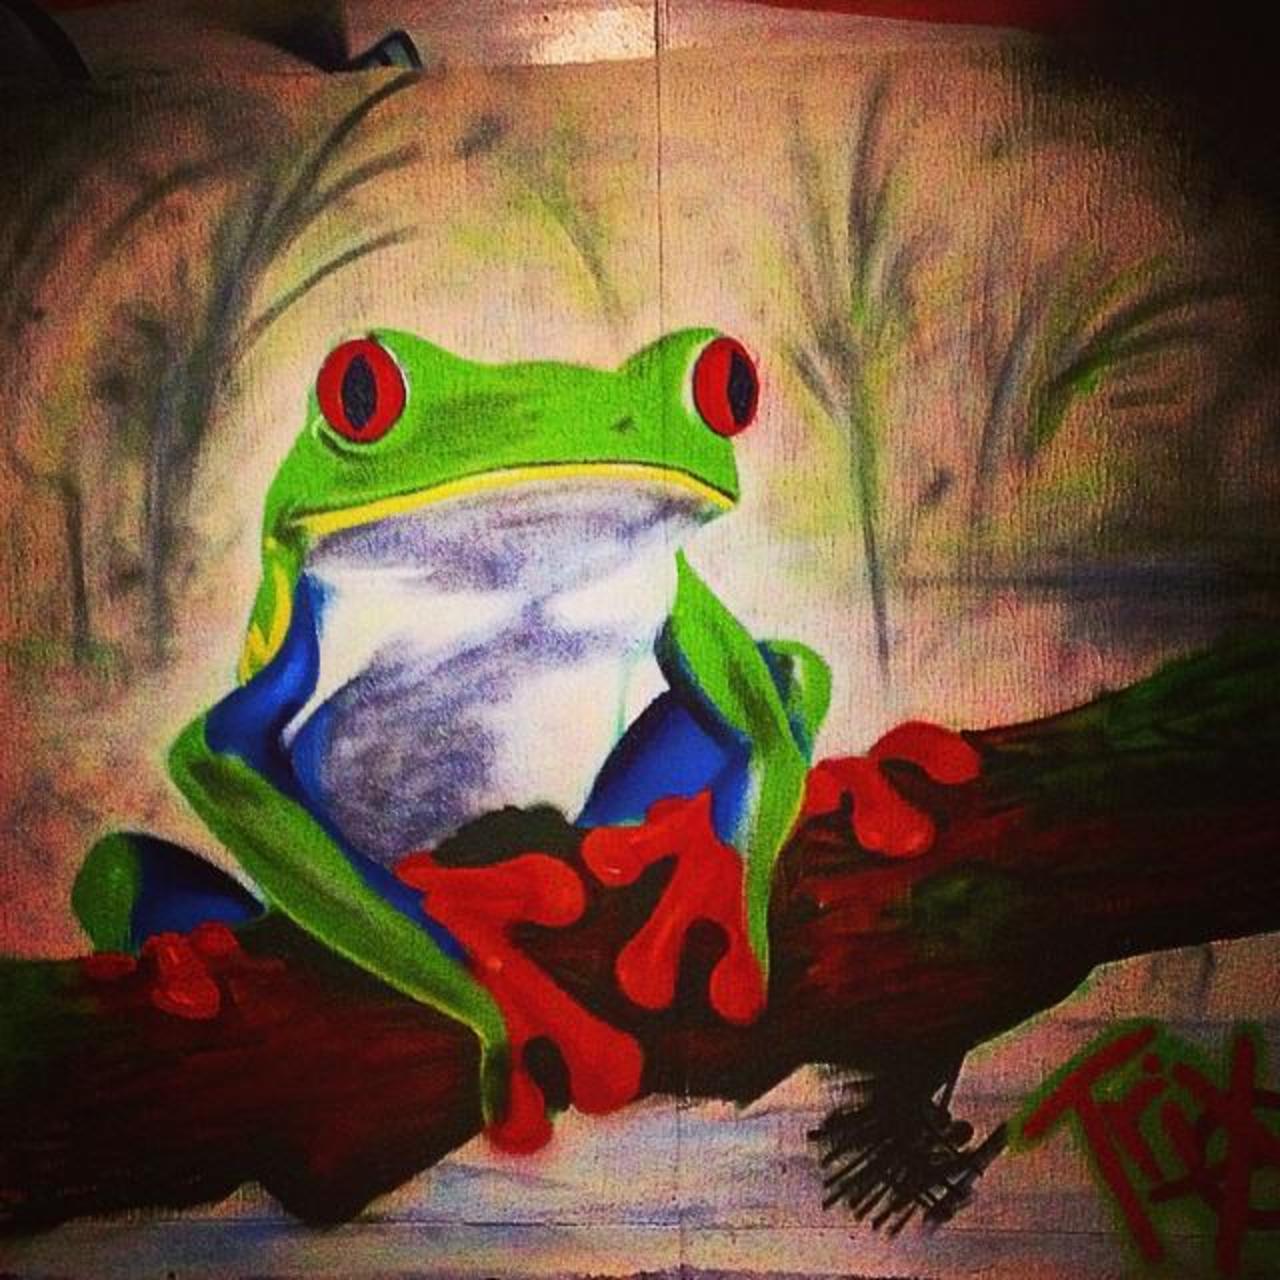 cute rainforest frog found in #Gloucester by artist Trix @rtglos #streetart #graffiti #photography http://t.co/PpRQoXV4gF